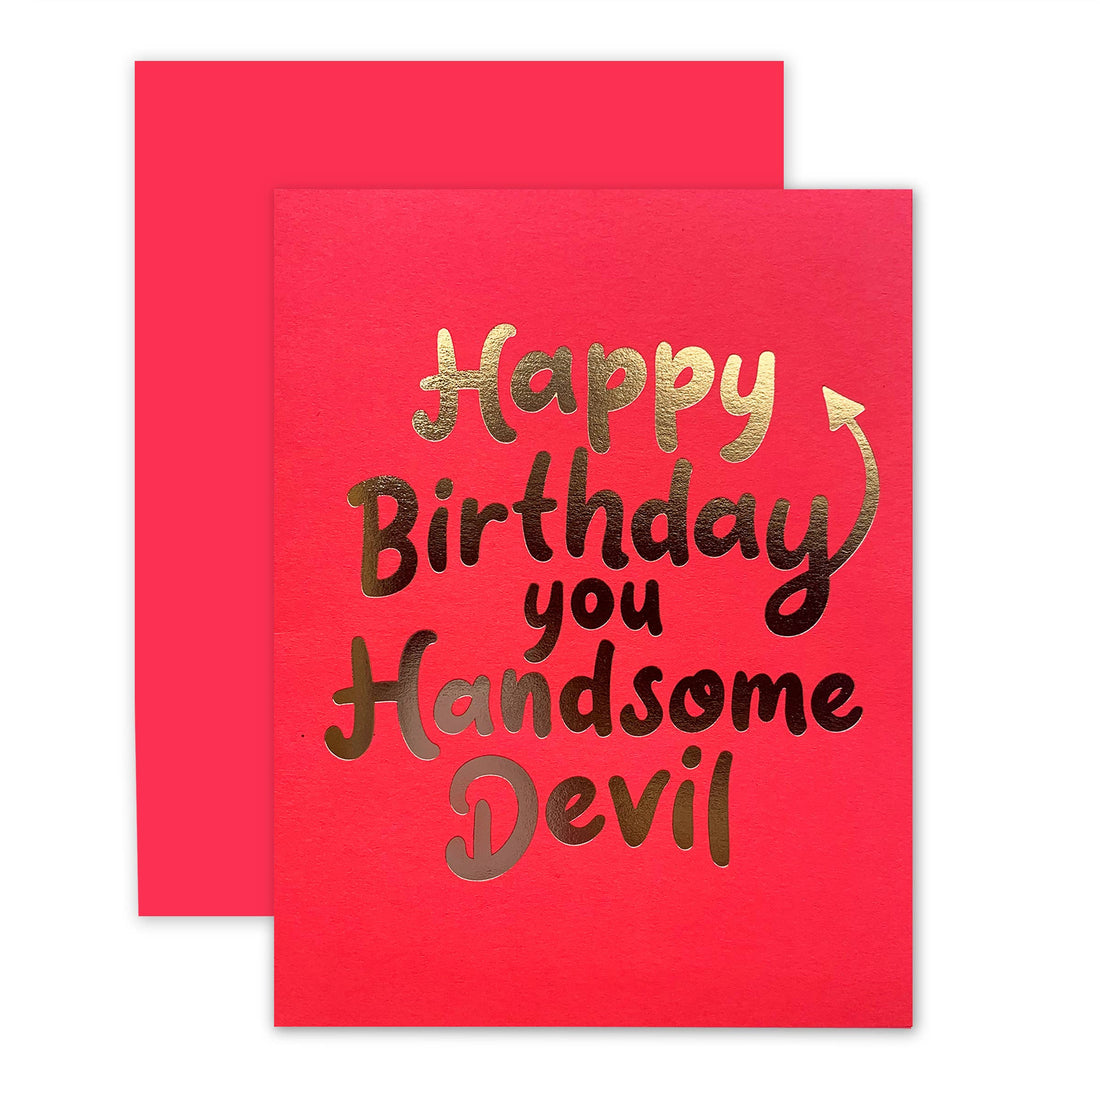 Handsome Devil Birthday